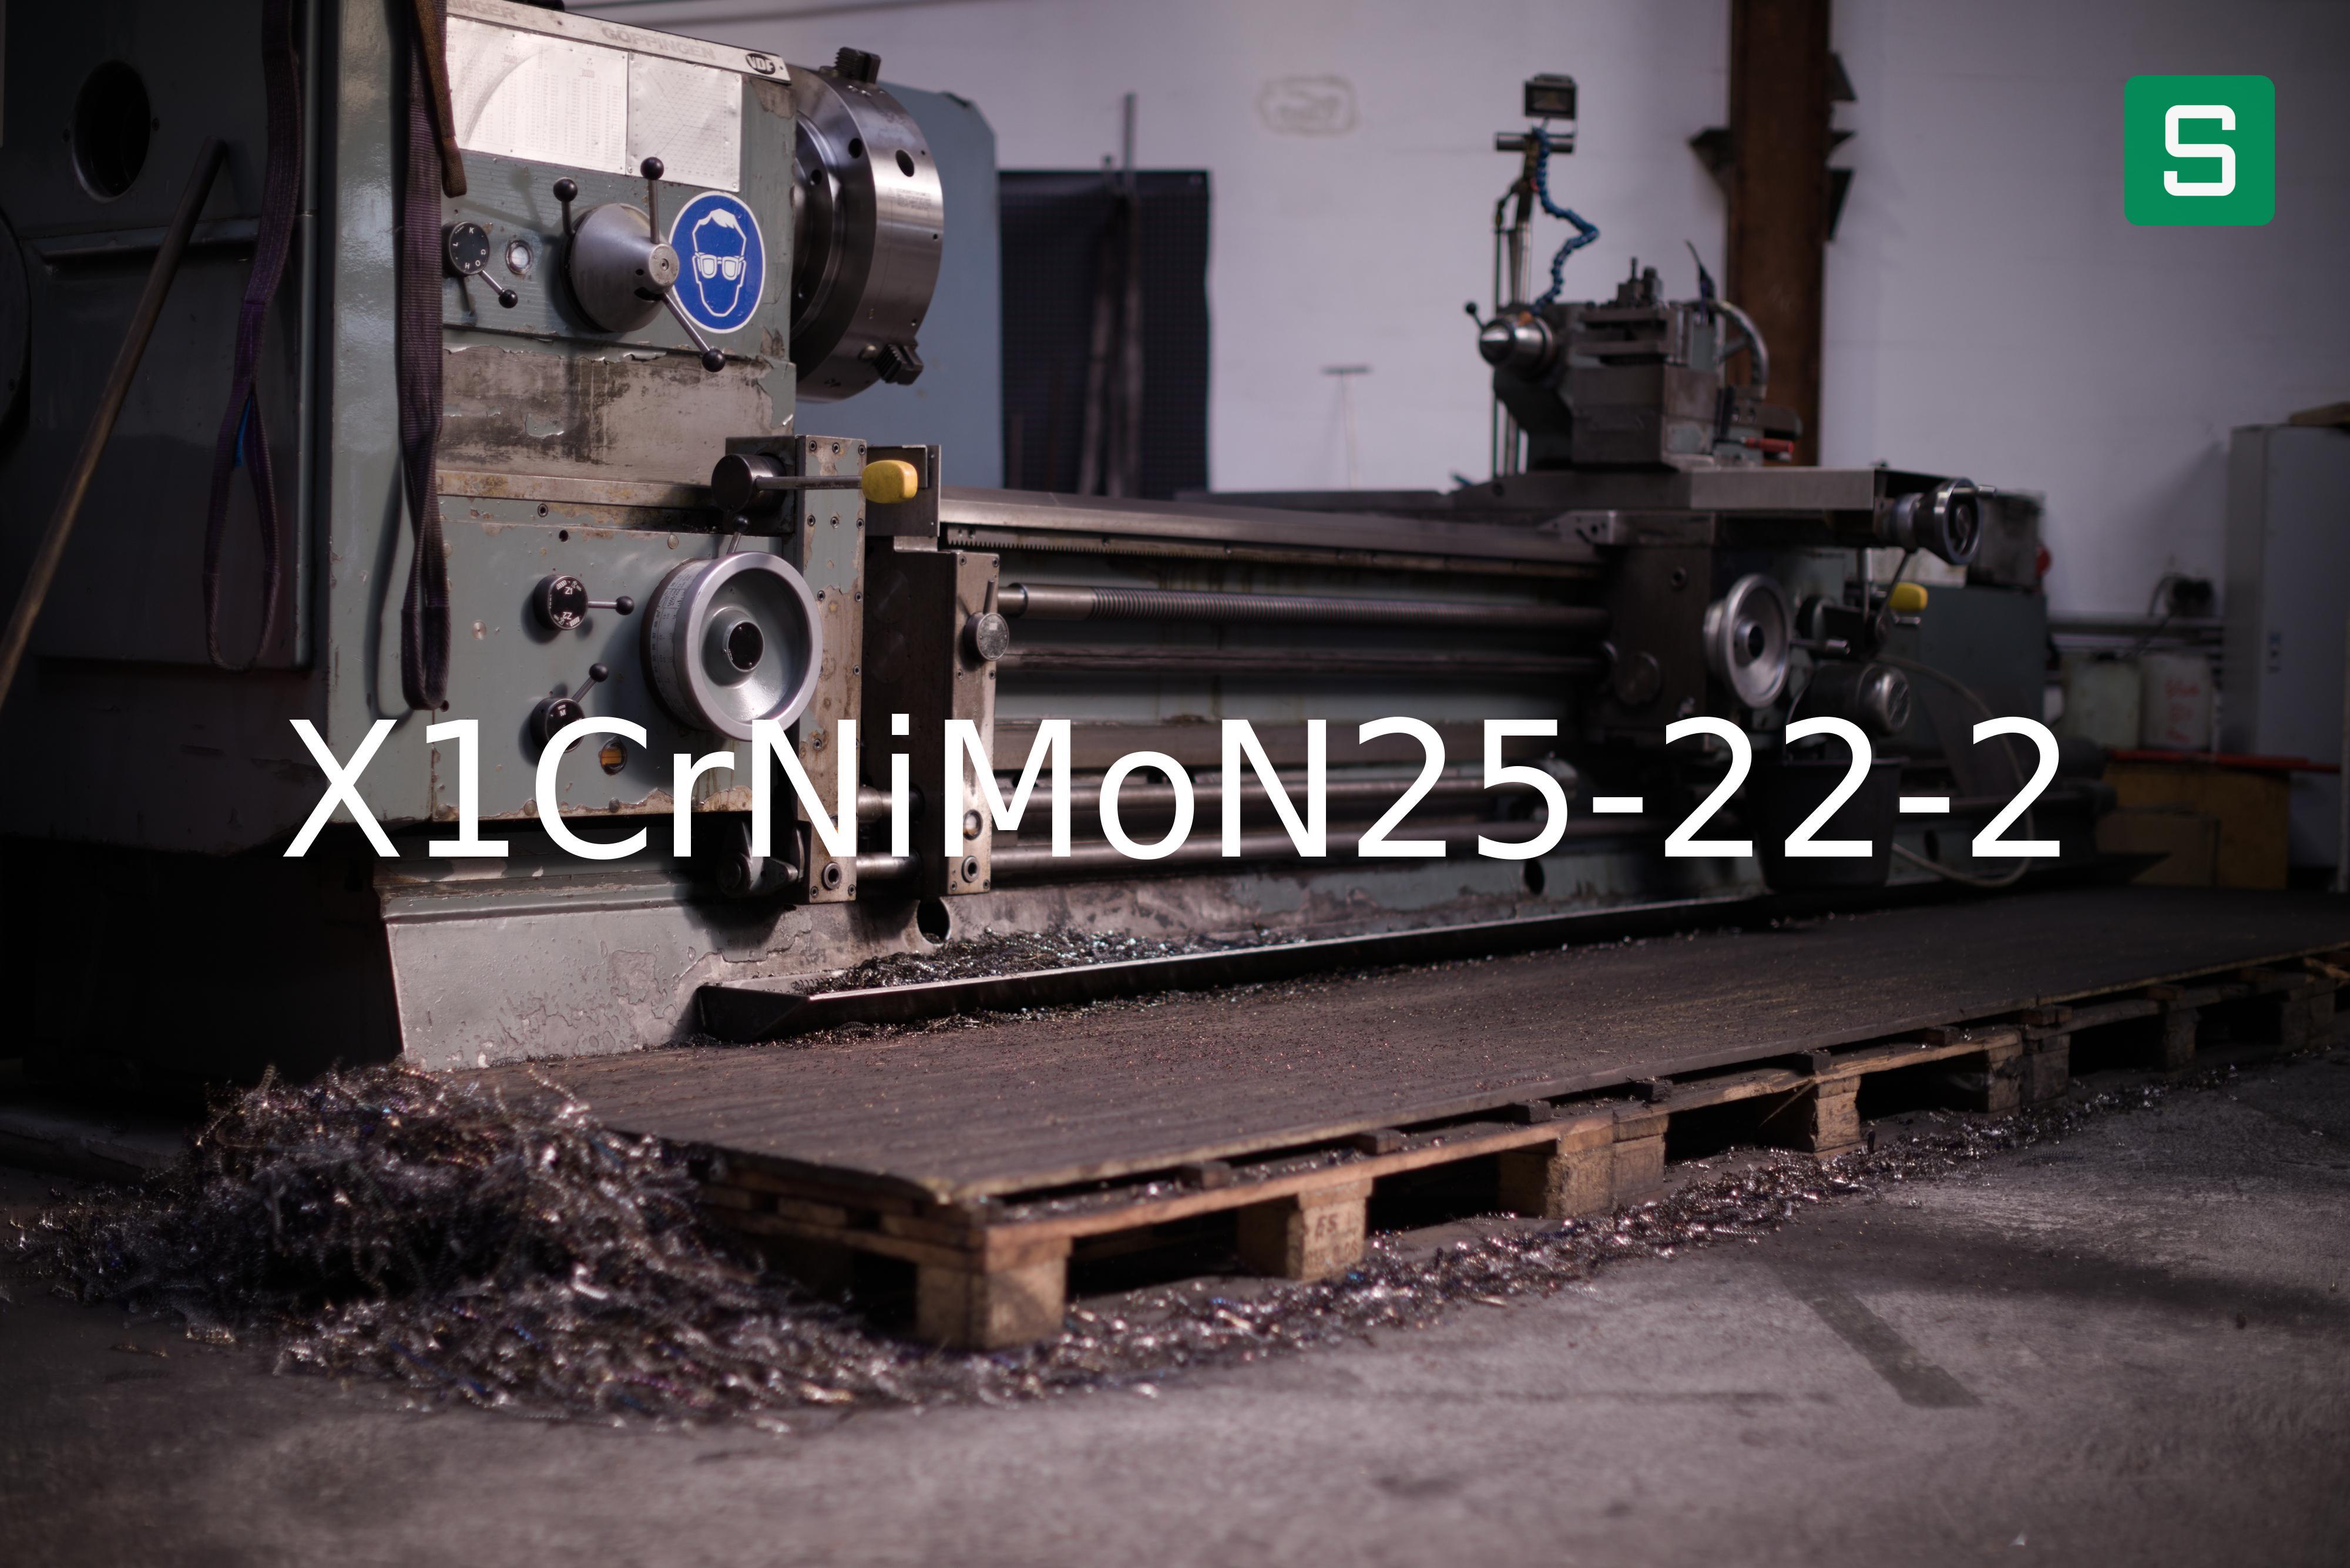 Steel Material: X1CrNiMoN25-22-2